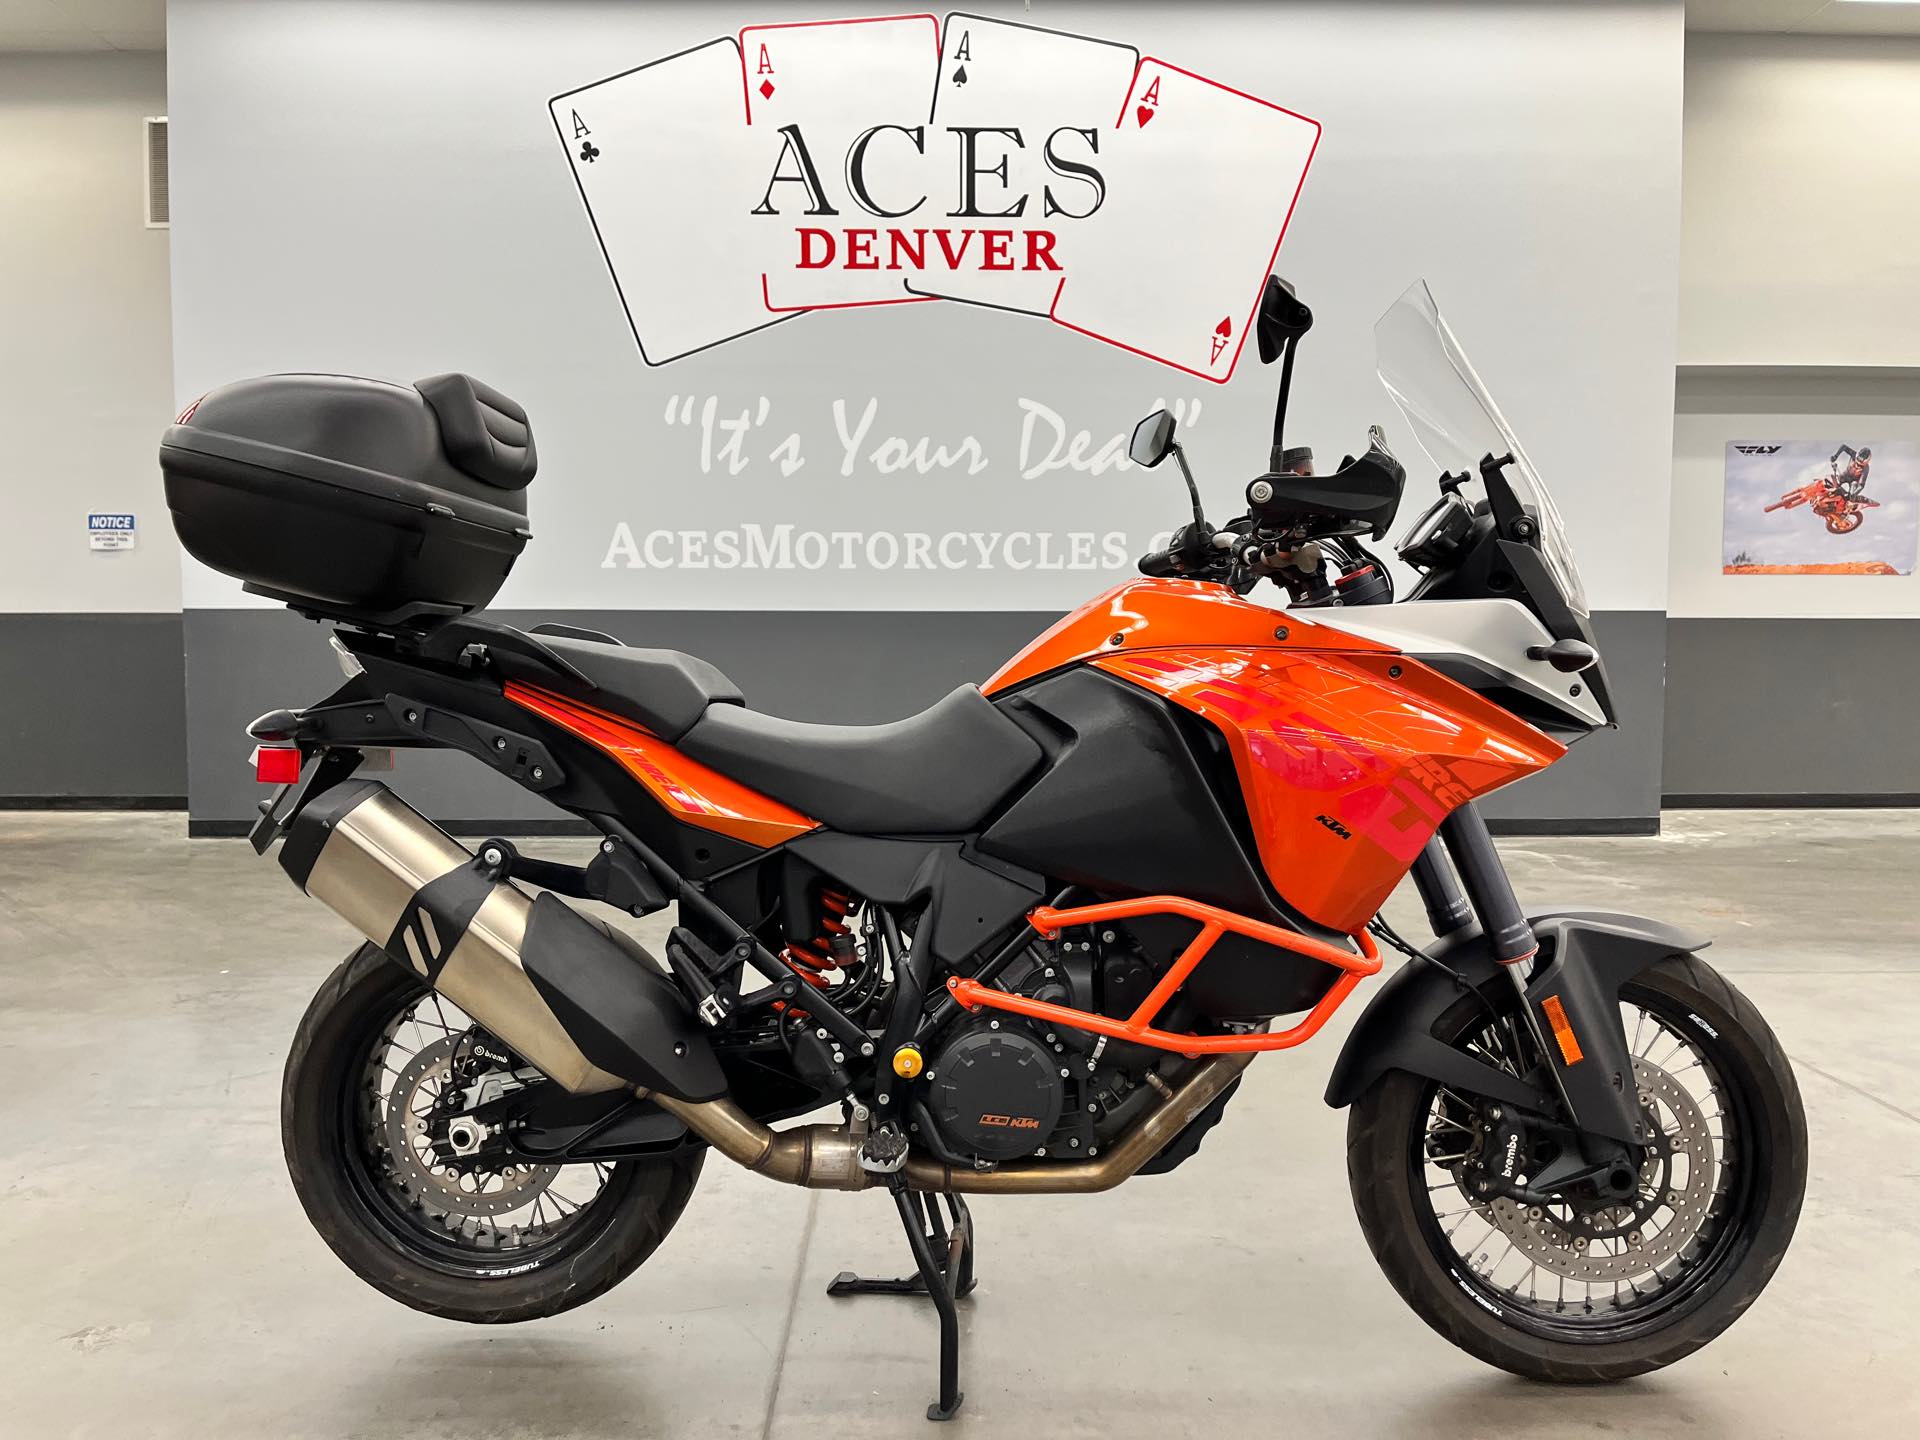 2014 KTM Adventure 1190 at Aces Motorcycles - Denver